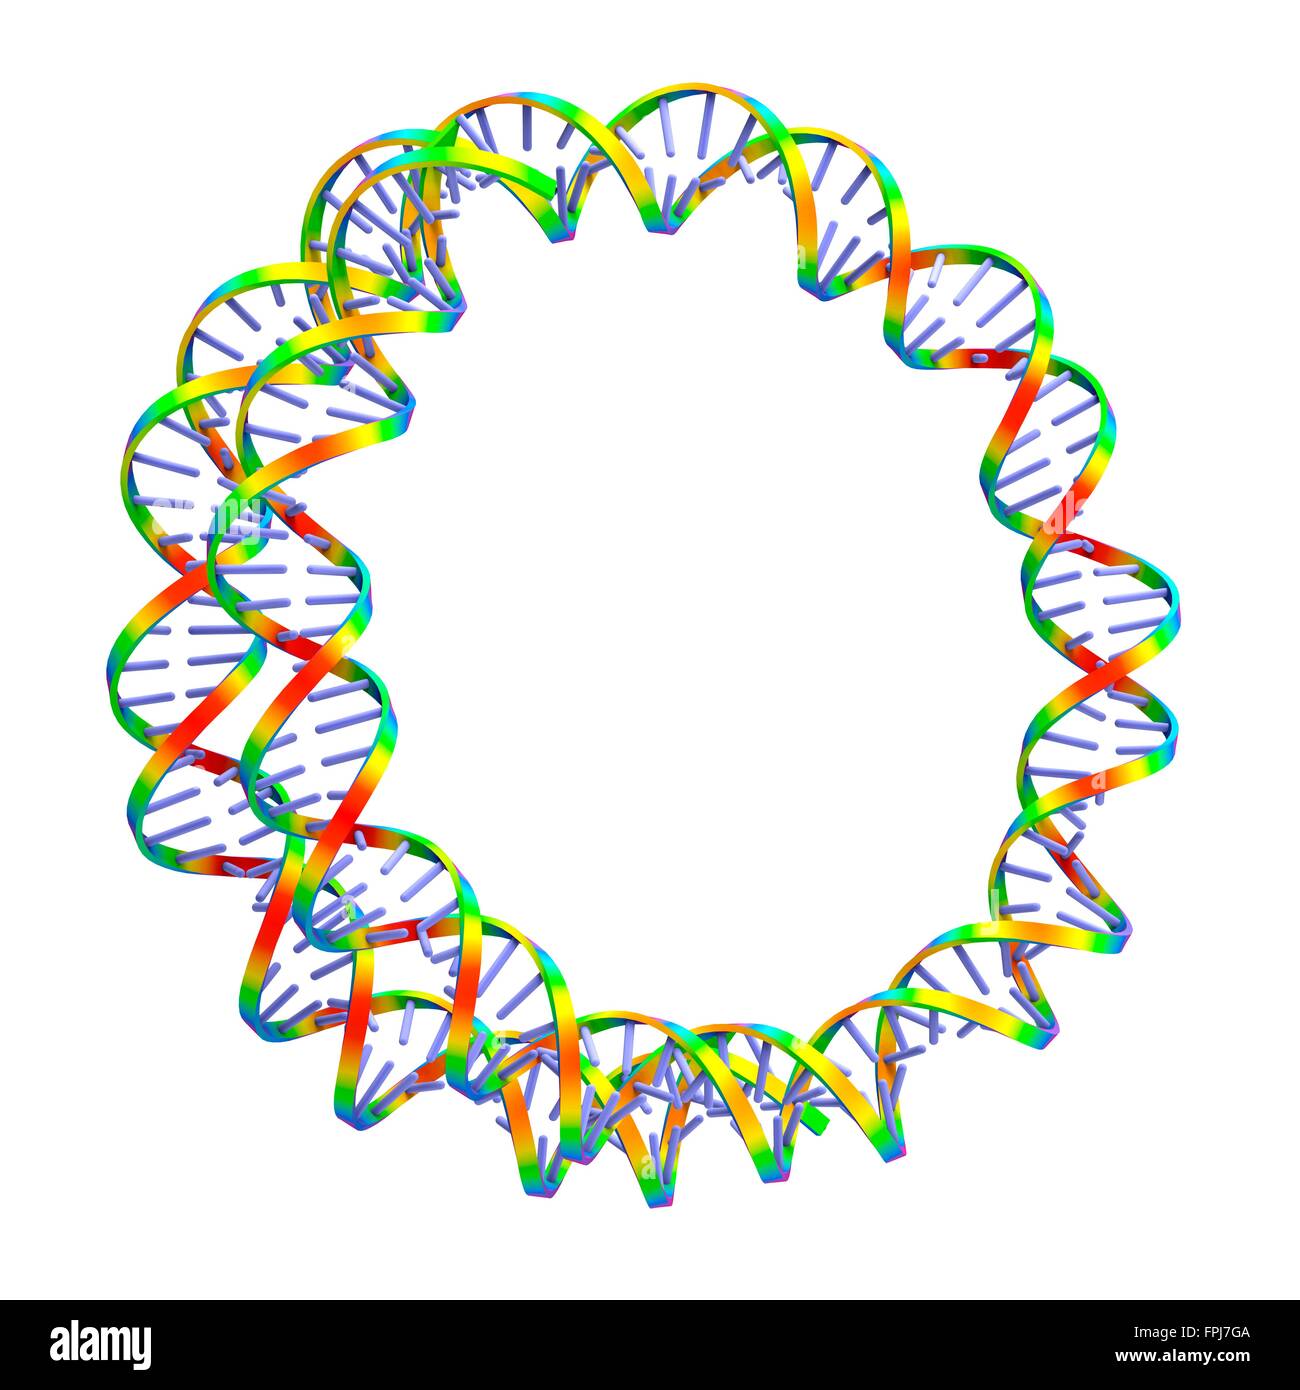 Circular DNA (deoxyribonucleic acid) molecule, computer artwork. Stock Photo